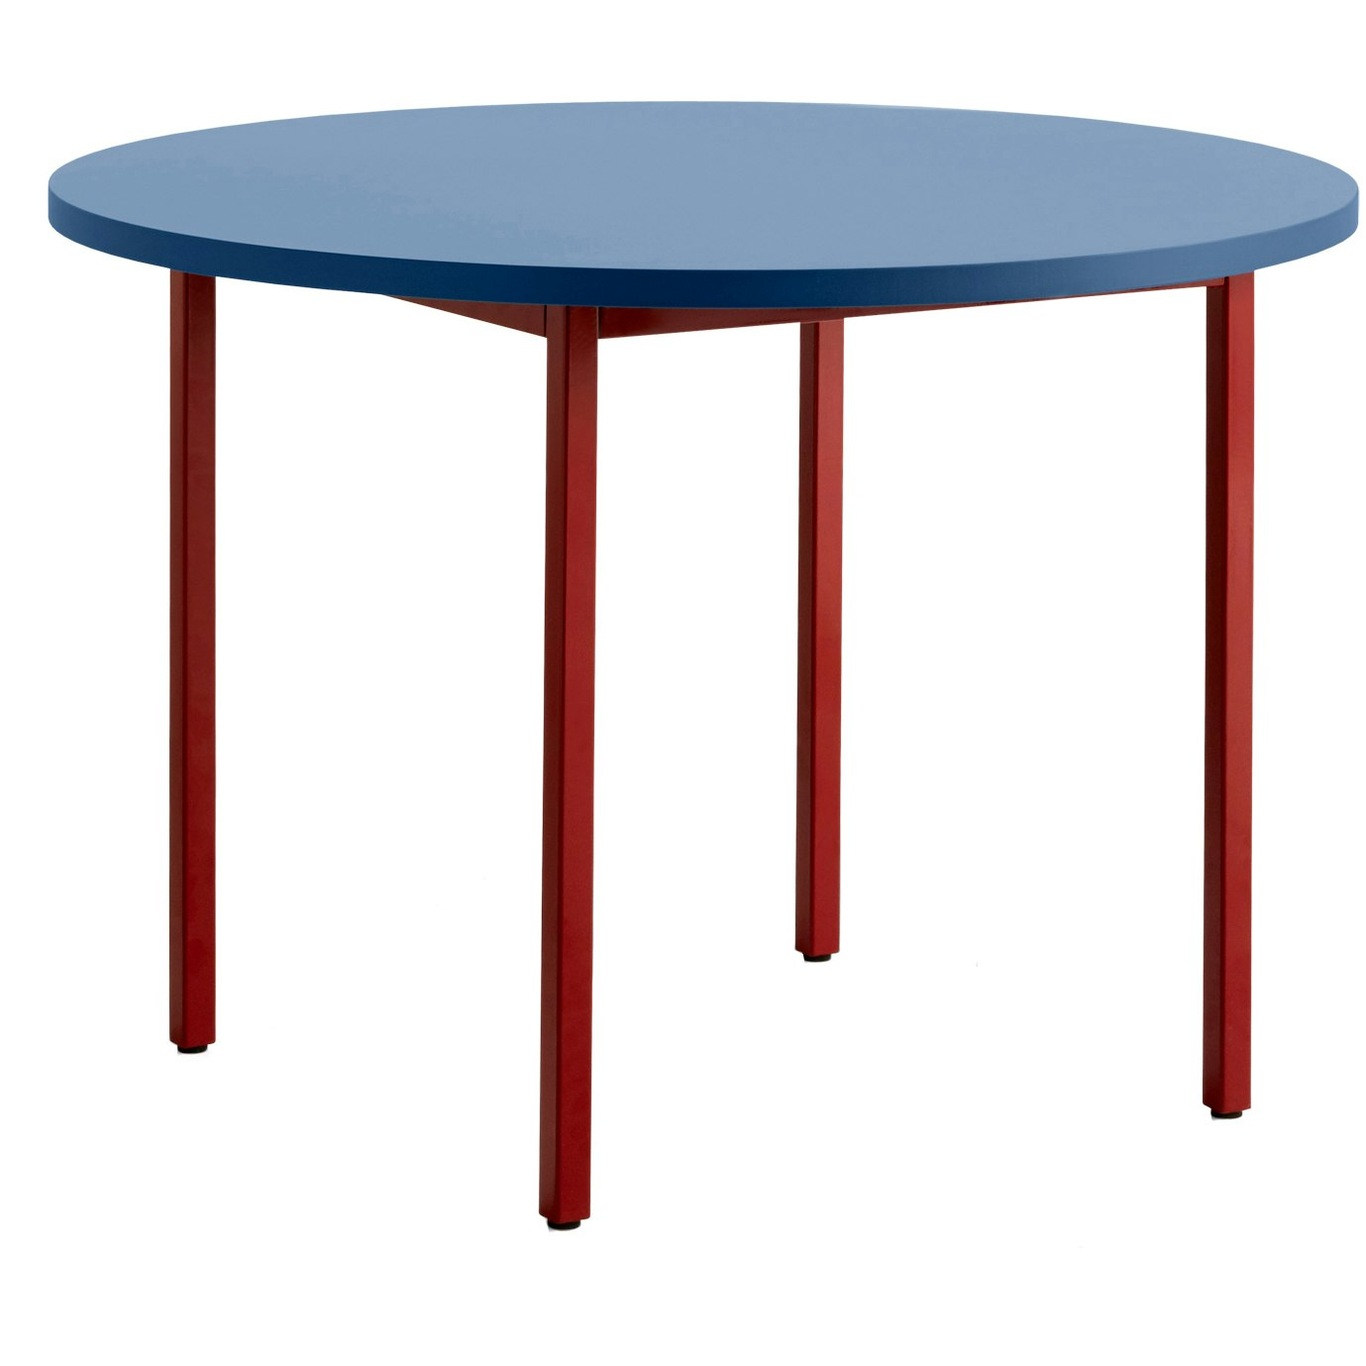 Two-Colour Tisch Ø105 cm, Weinrot / Blau